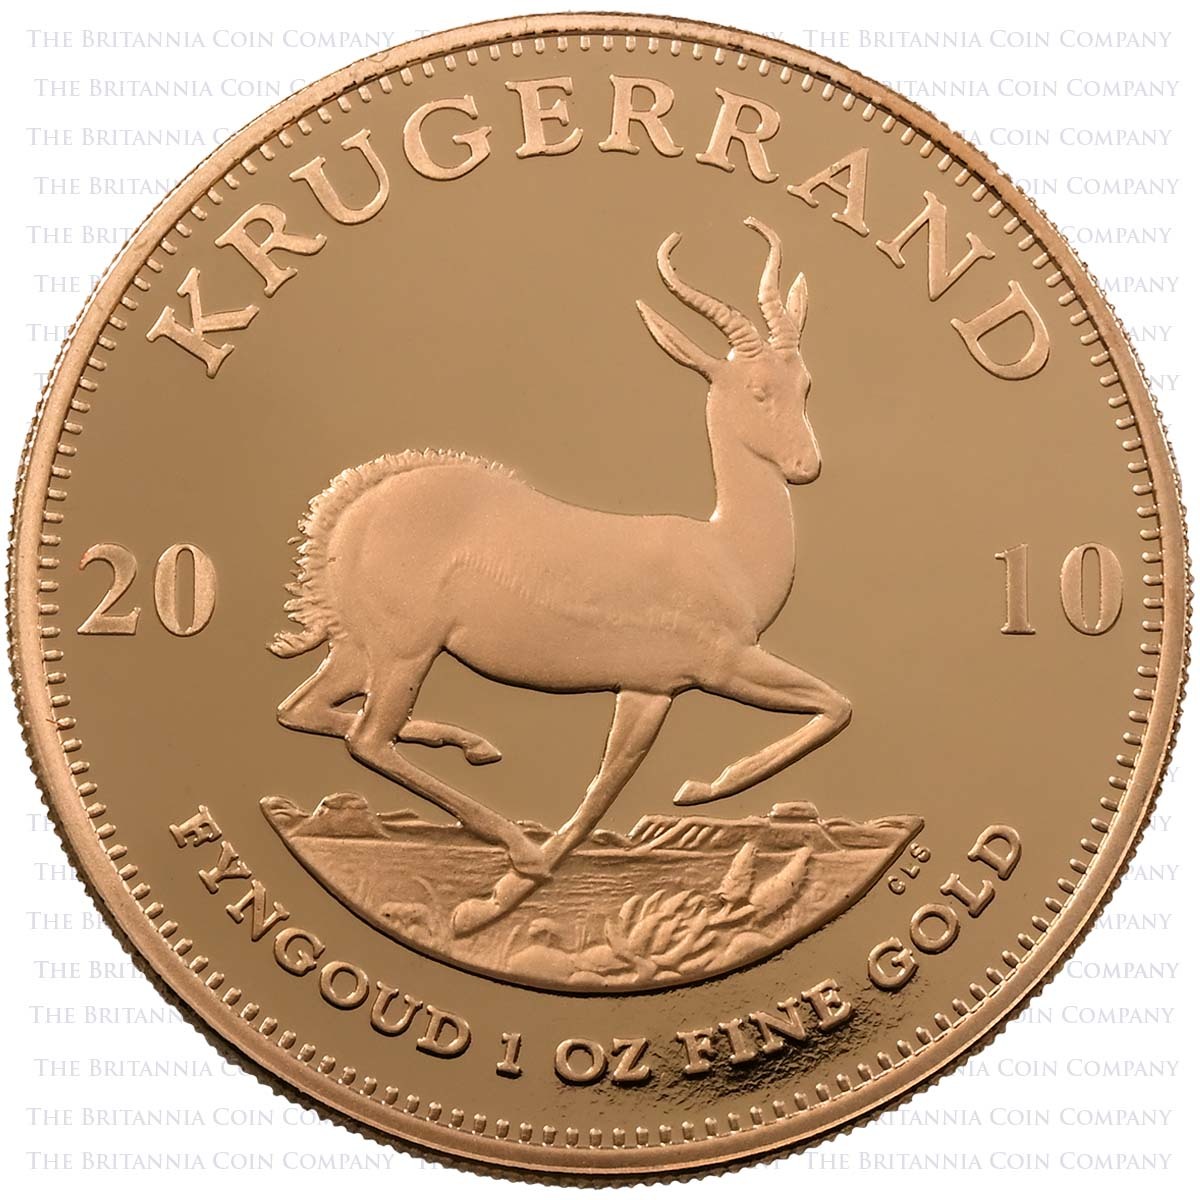 2010 4 Coin Gold Proof Krugerrand Prestige Set One Ounce Obverse